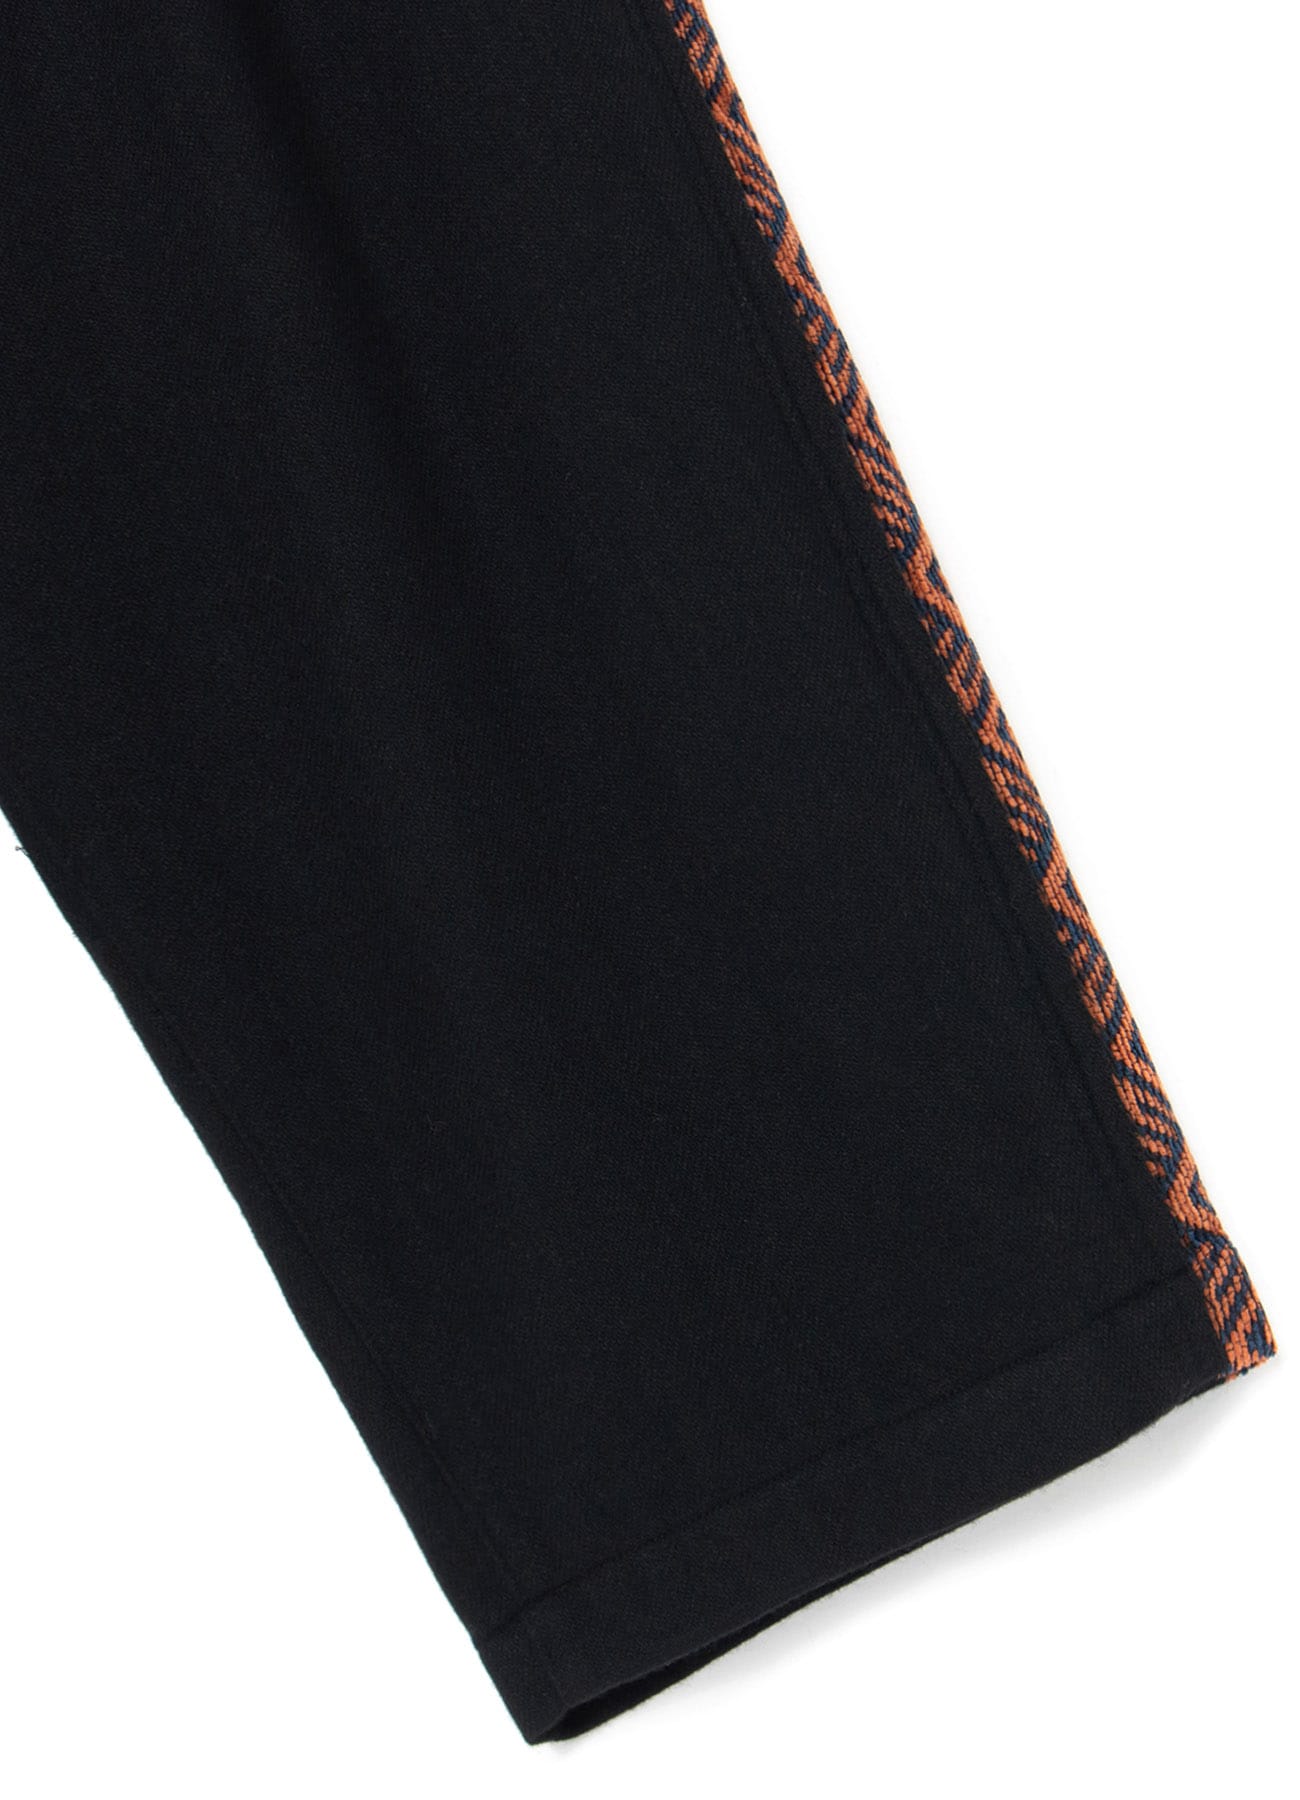 Flannel + Ecuadorian Woven Braid Side-Switching Pants